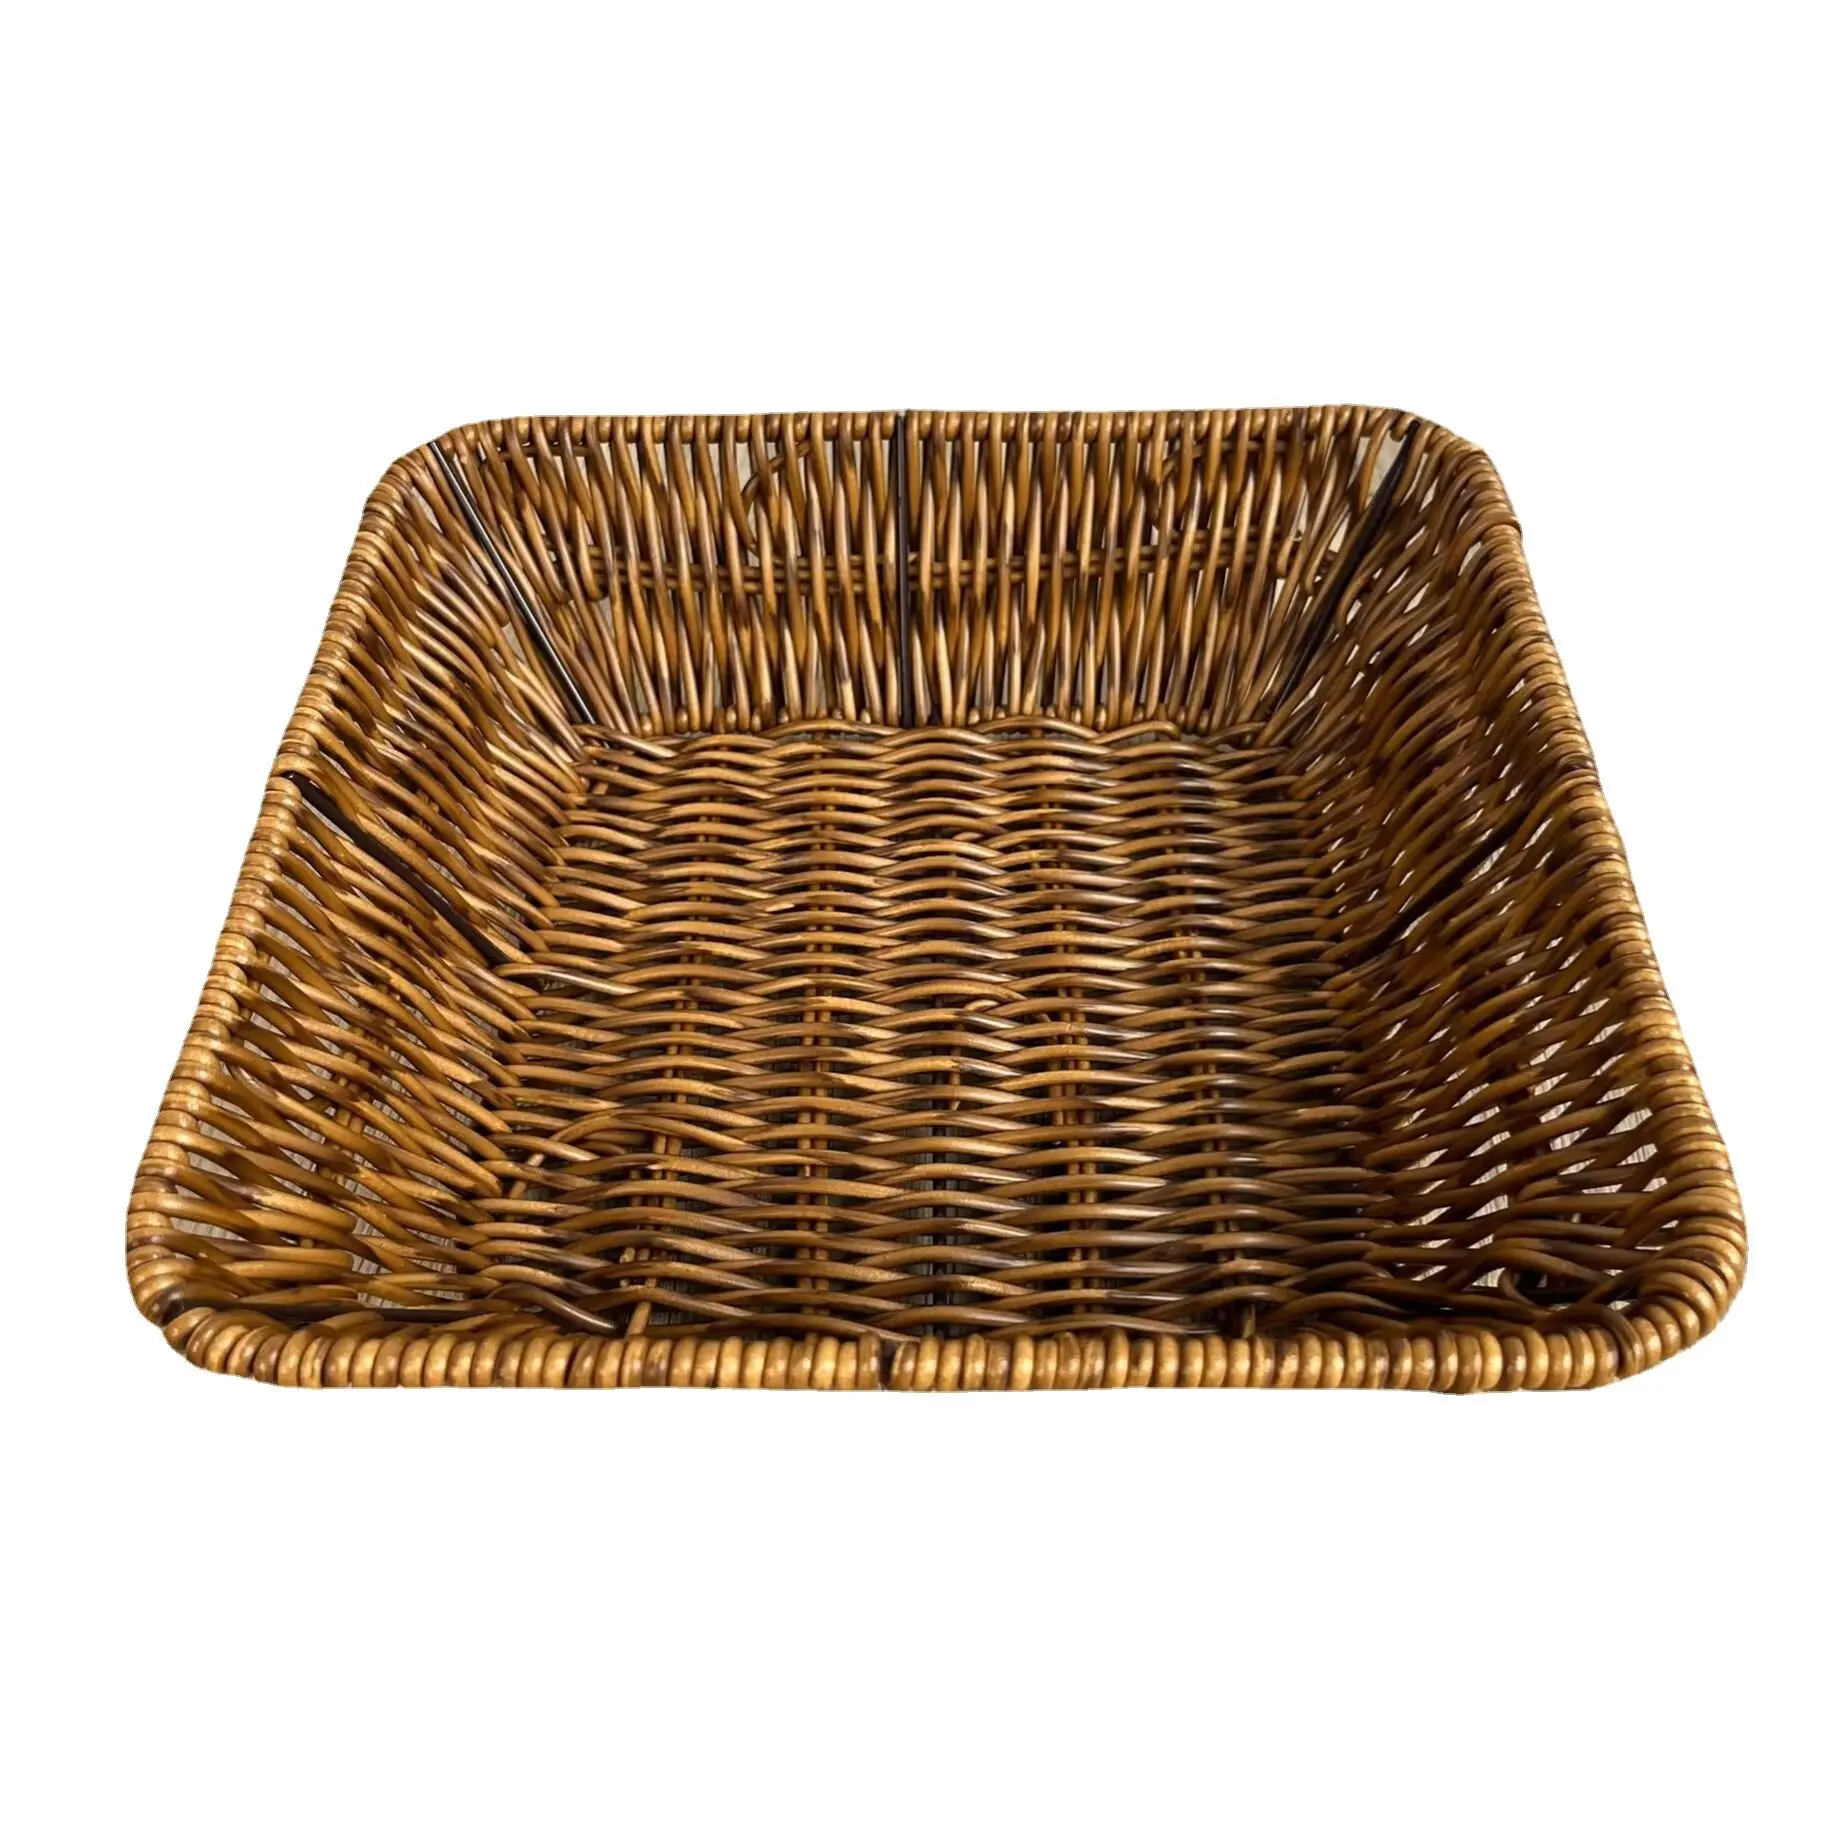 Stackable Rattan Round Fruit Basket Woven Food Bread Storage Basket for Kitchen Restaurant